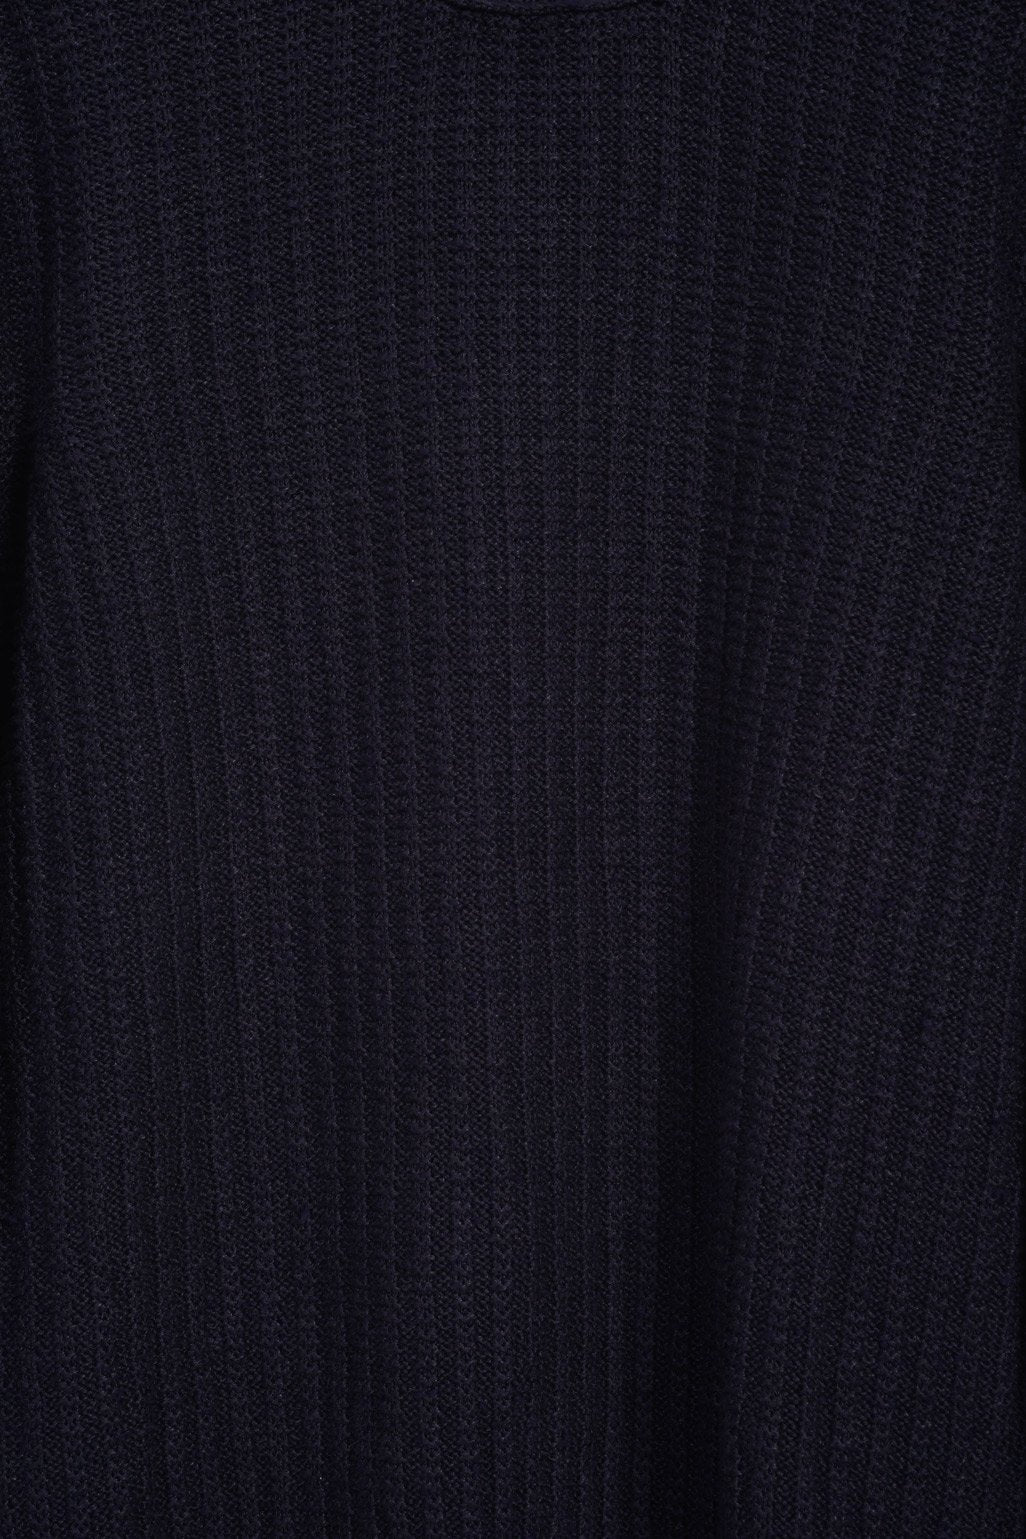 CHEVRON C/N | Chevron Knit | Navy | €350 -Inis Meáin- HANSEN Garments